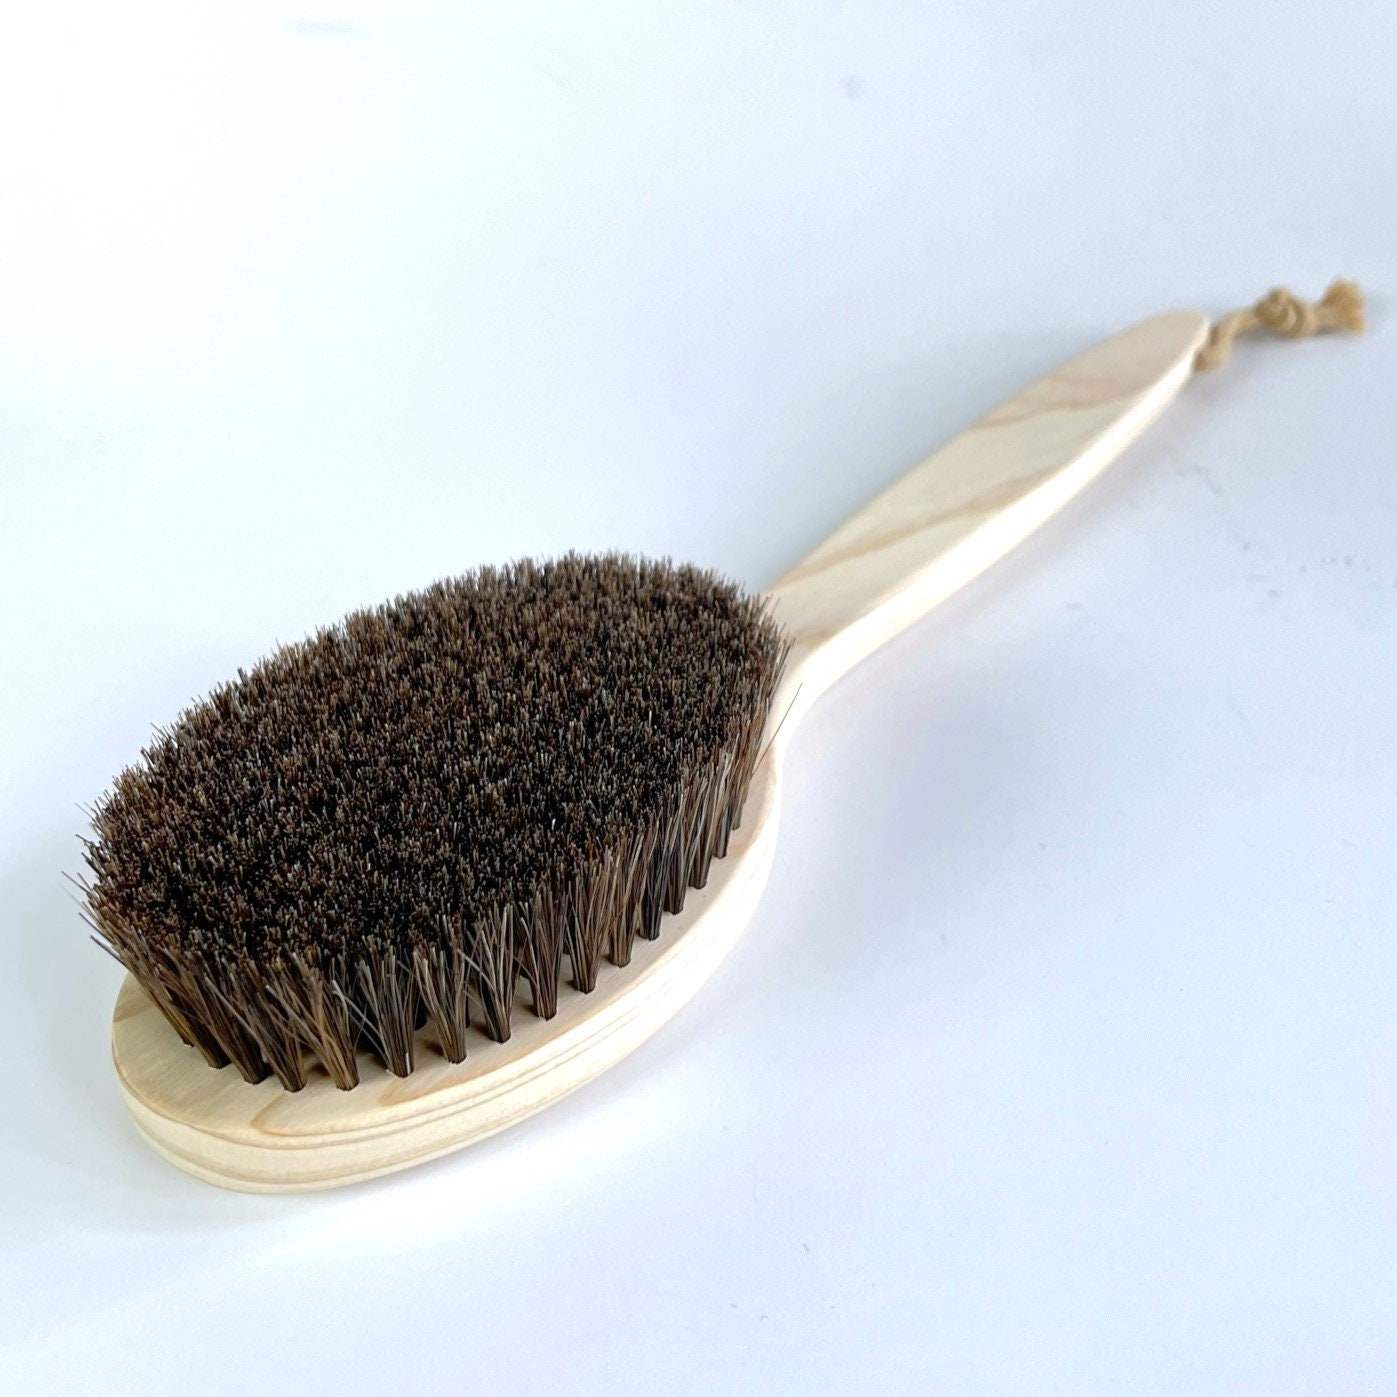 Vintage Extra Large Paint Brush, Wooden Handle Natural Bristle Paintbrush 